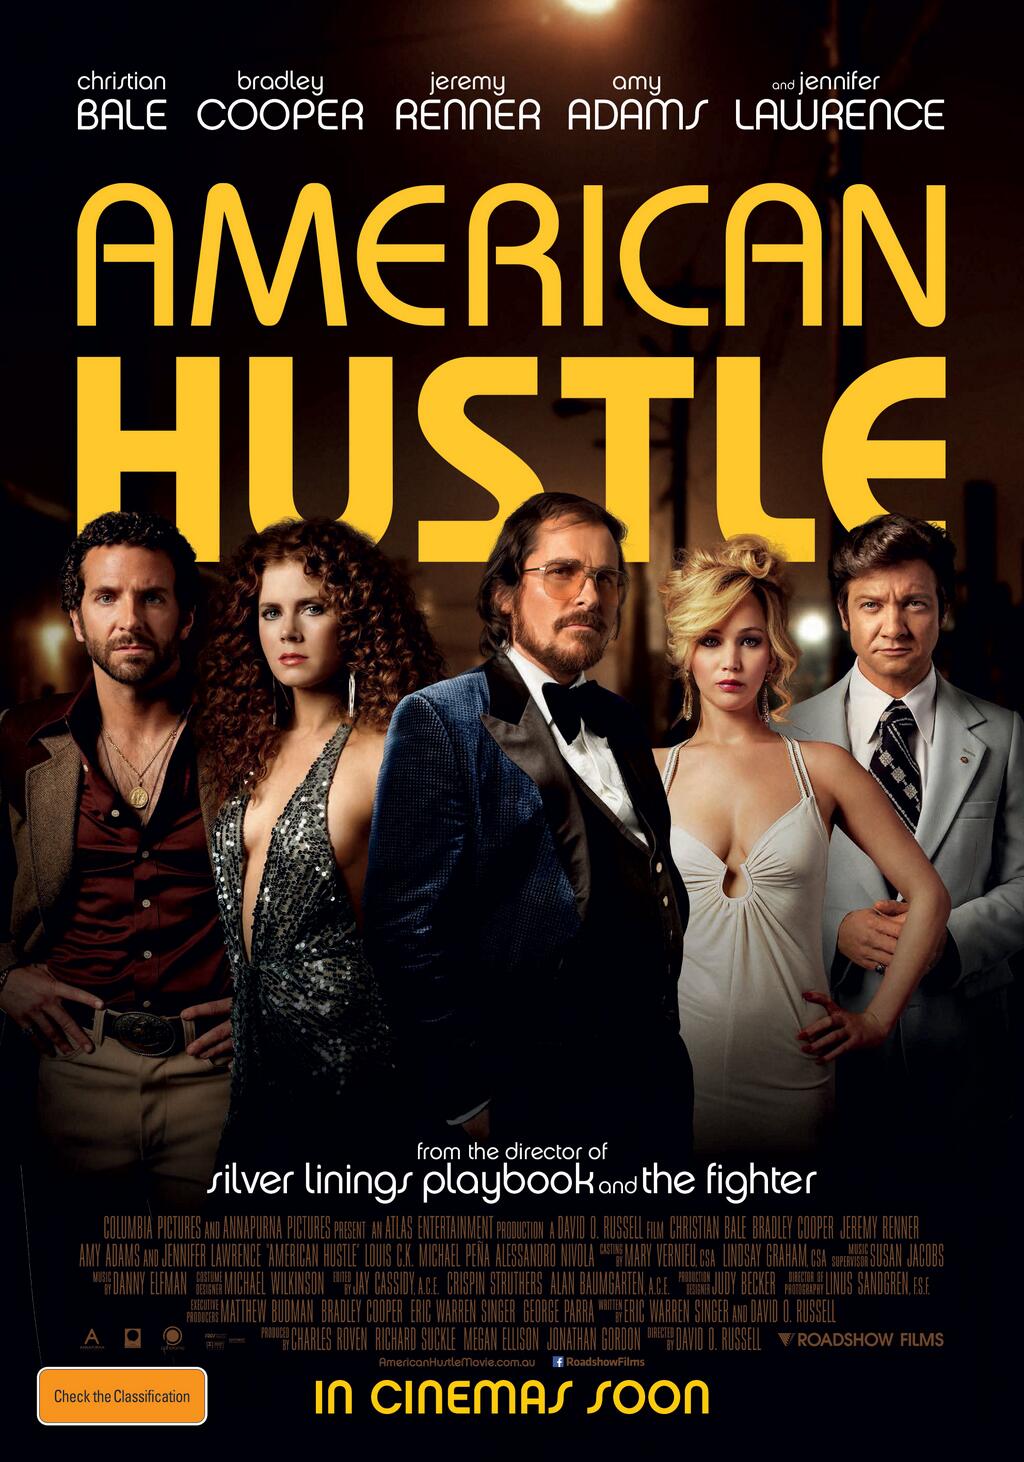 American-Hustle-poster.jpg